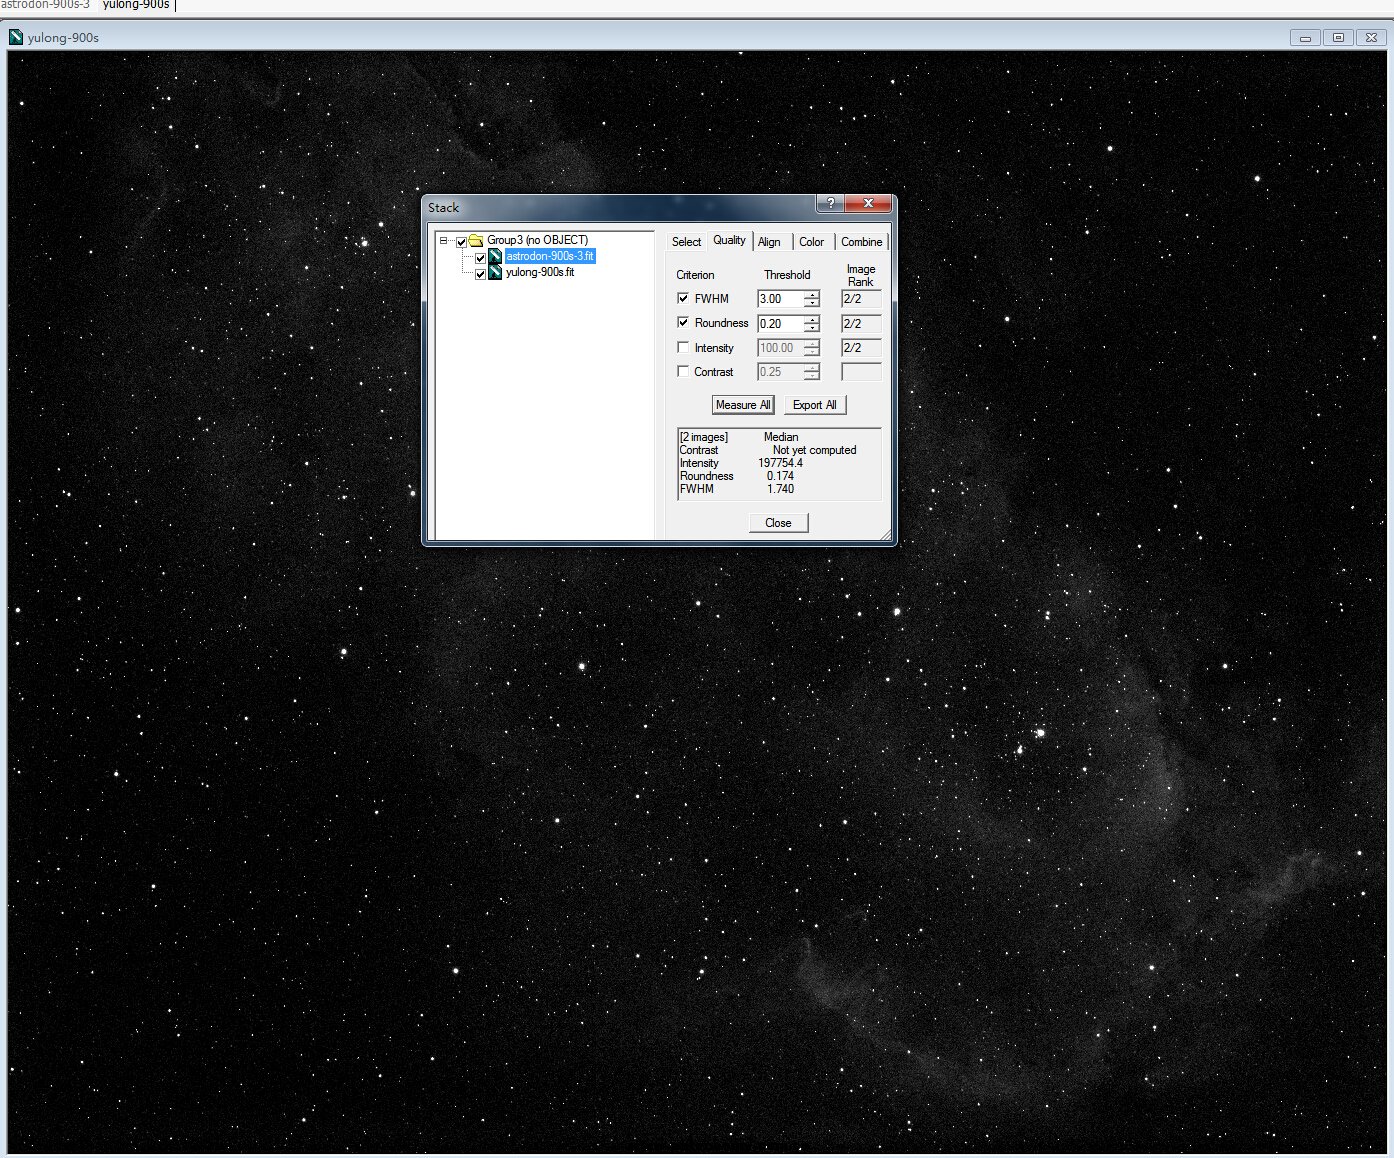 astrodon-900s-3-fwhm.jpg